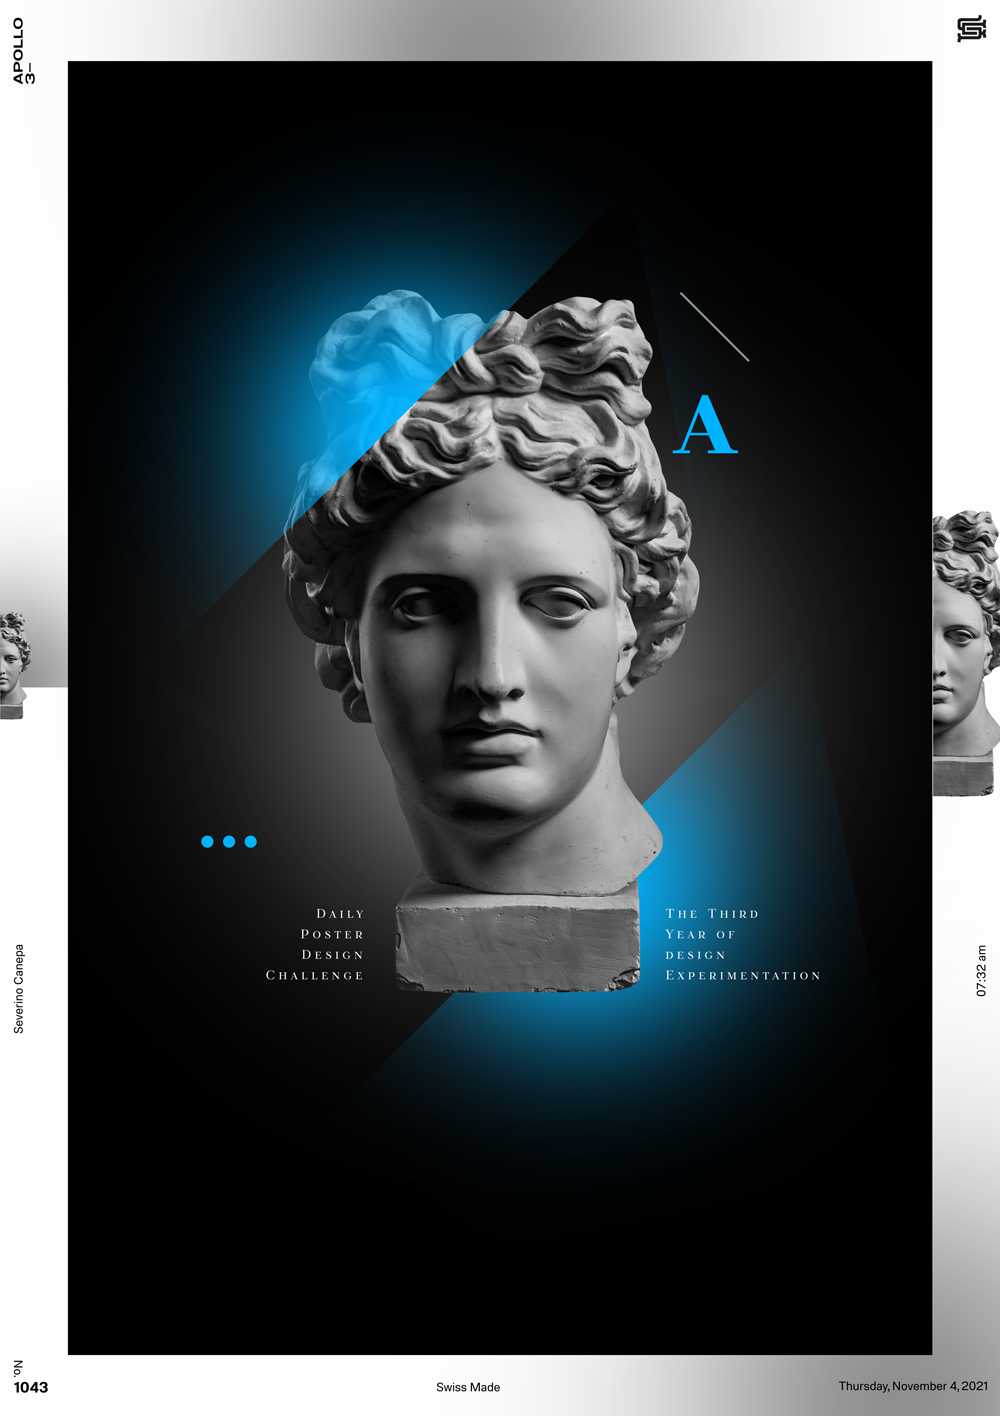 Minimalist digital creation made with Apollo's statue